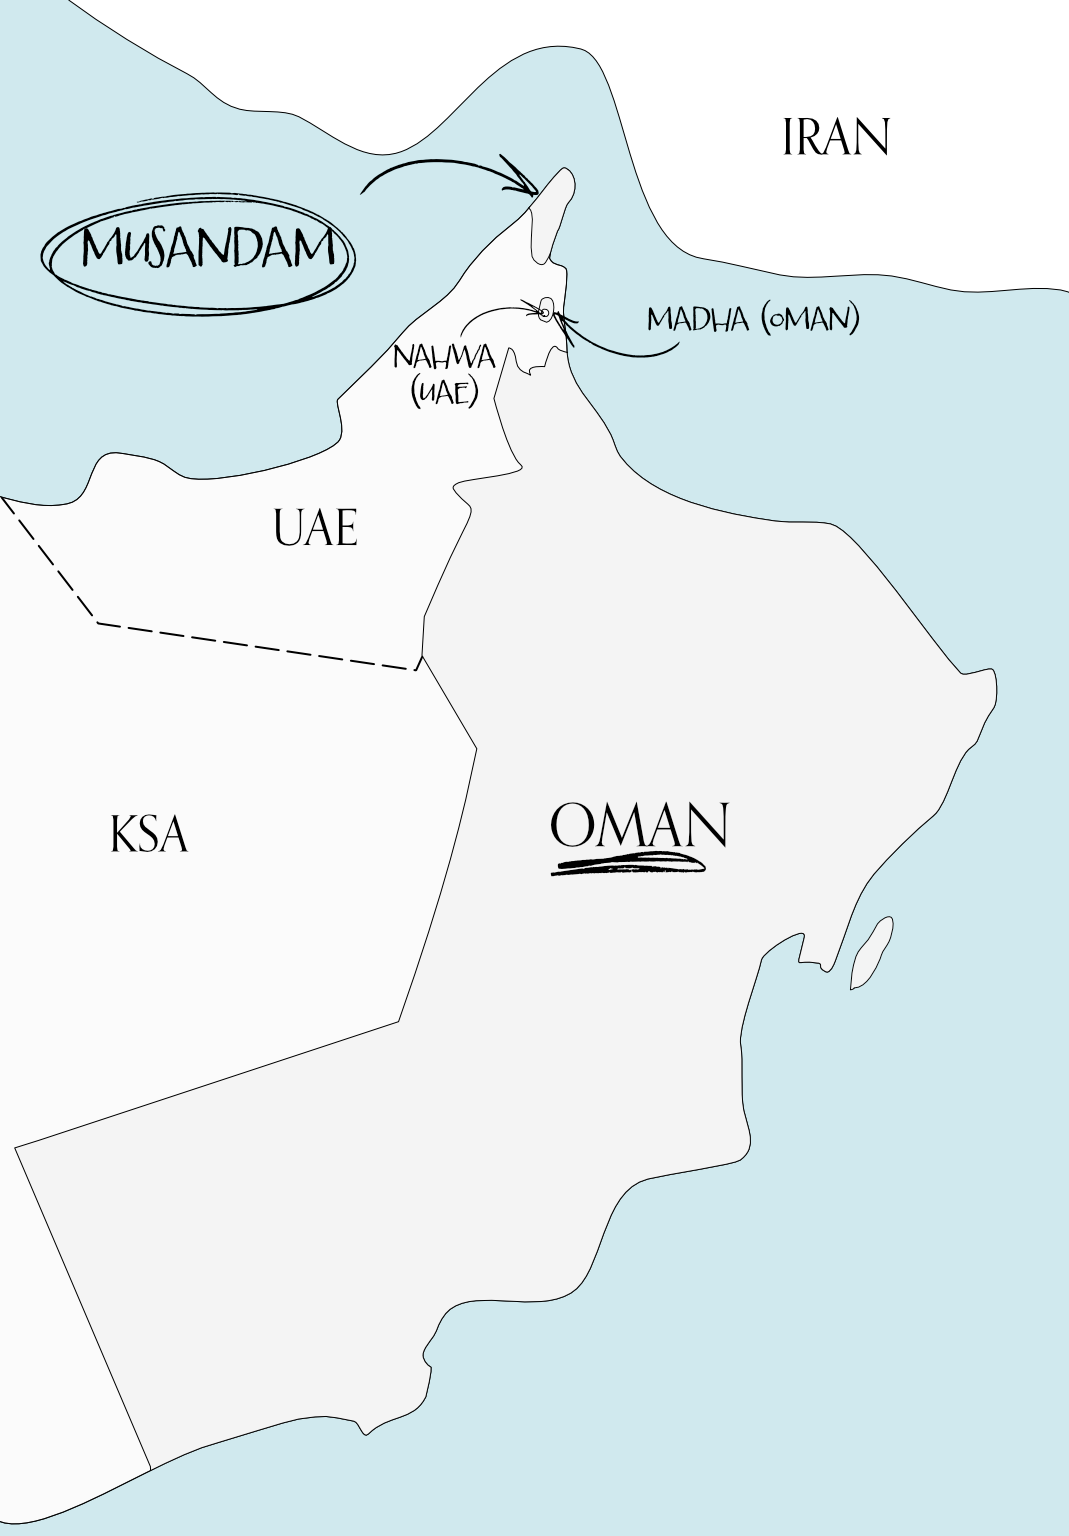 Map of Oman including Musandam